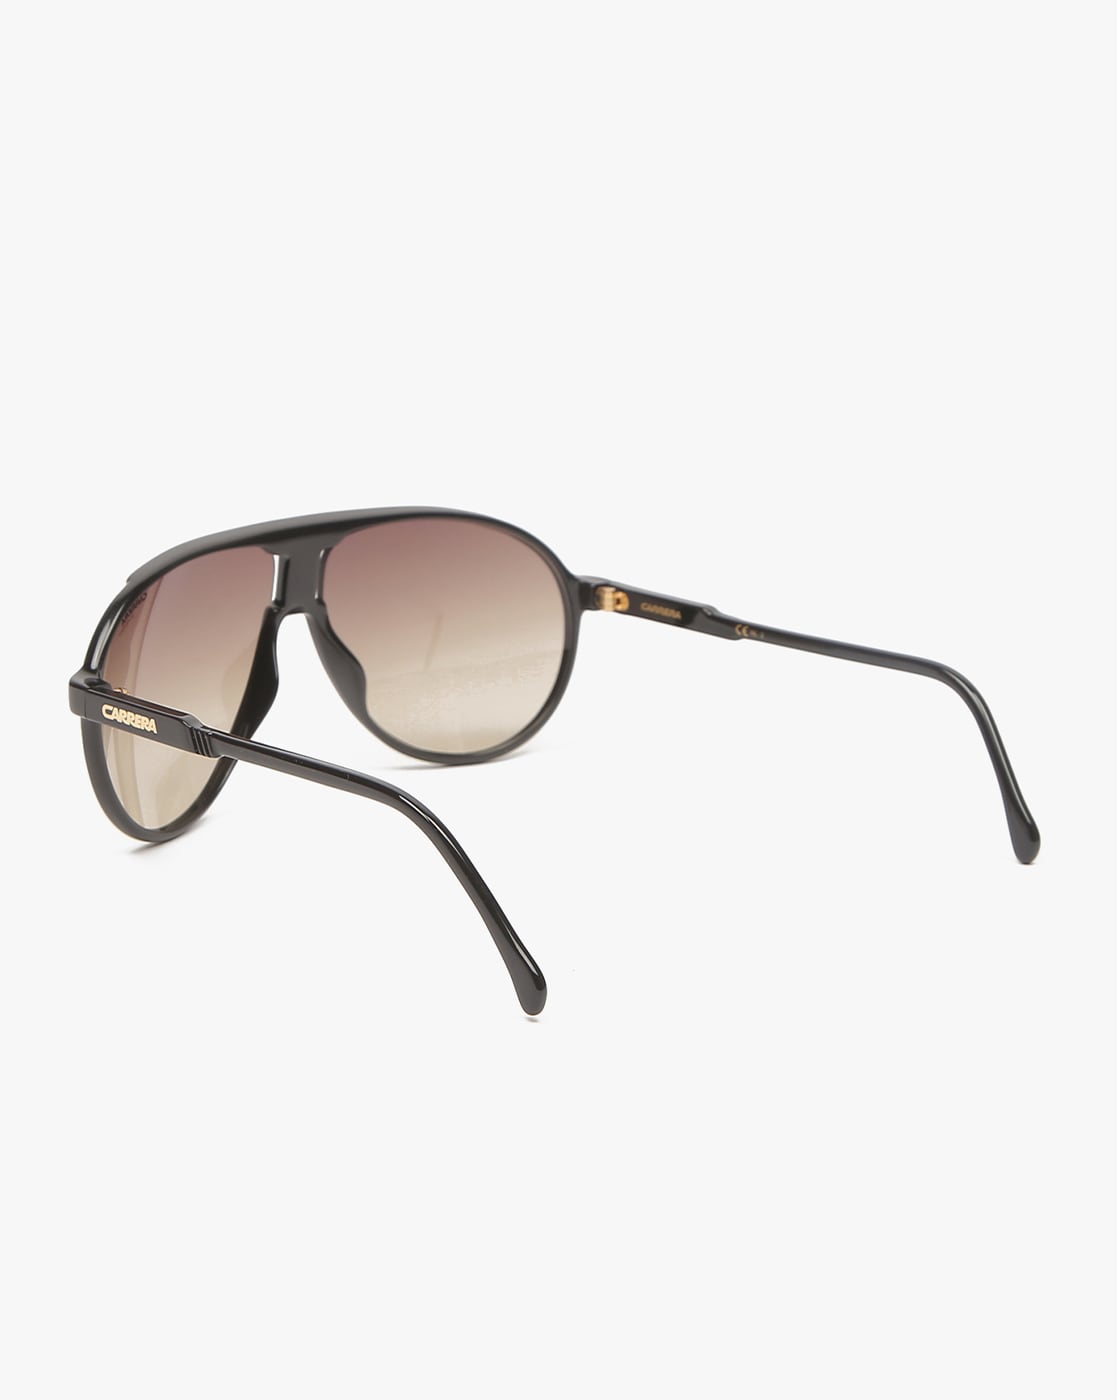 Buy Brown Sunglasses for Men by CARRERA Online